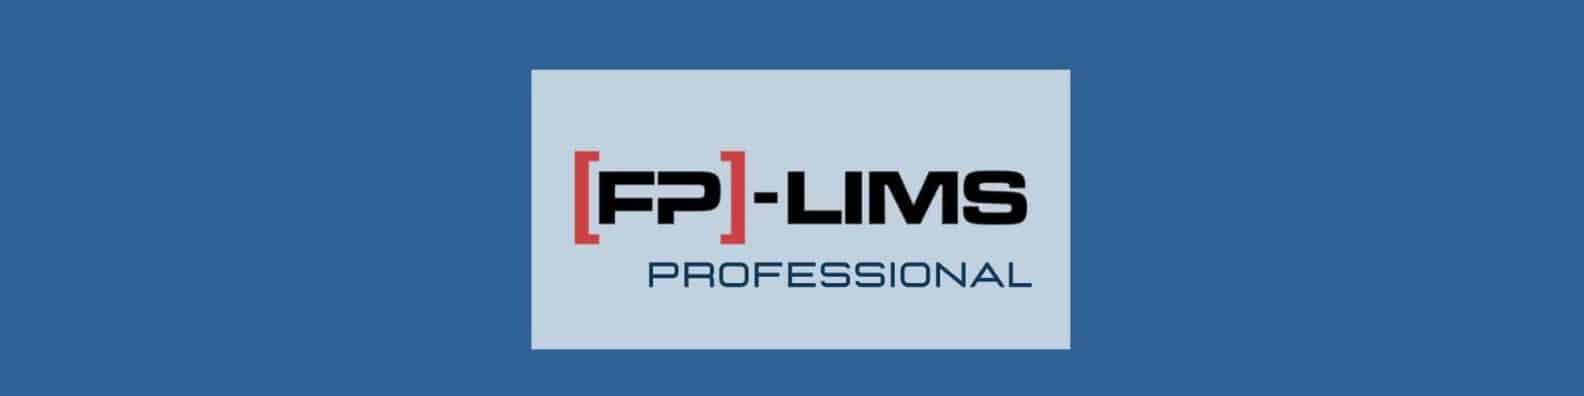 FP-LIMS-PROFESSIONAL